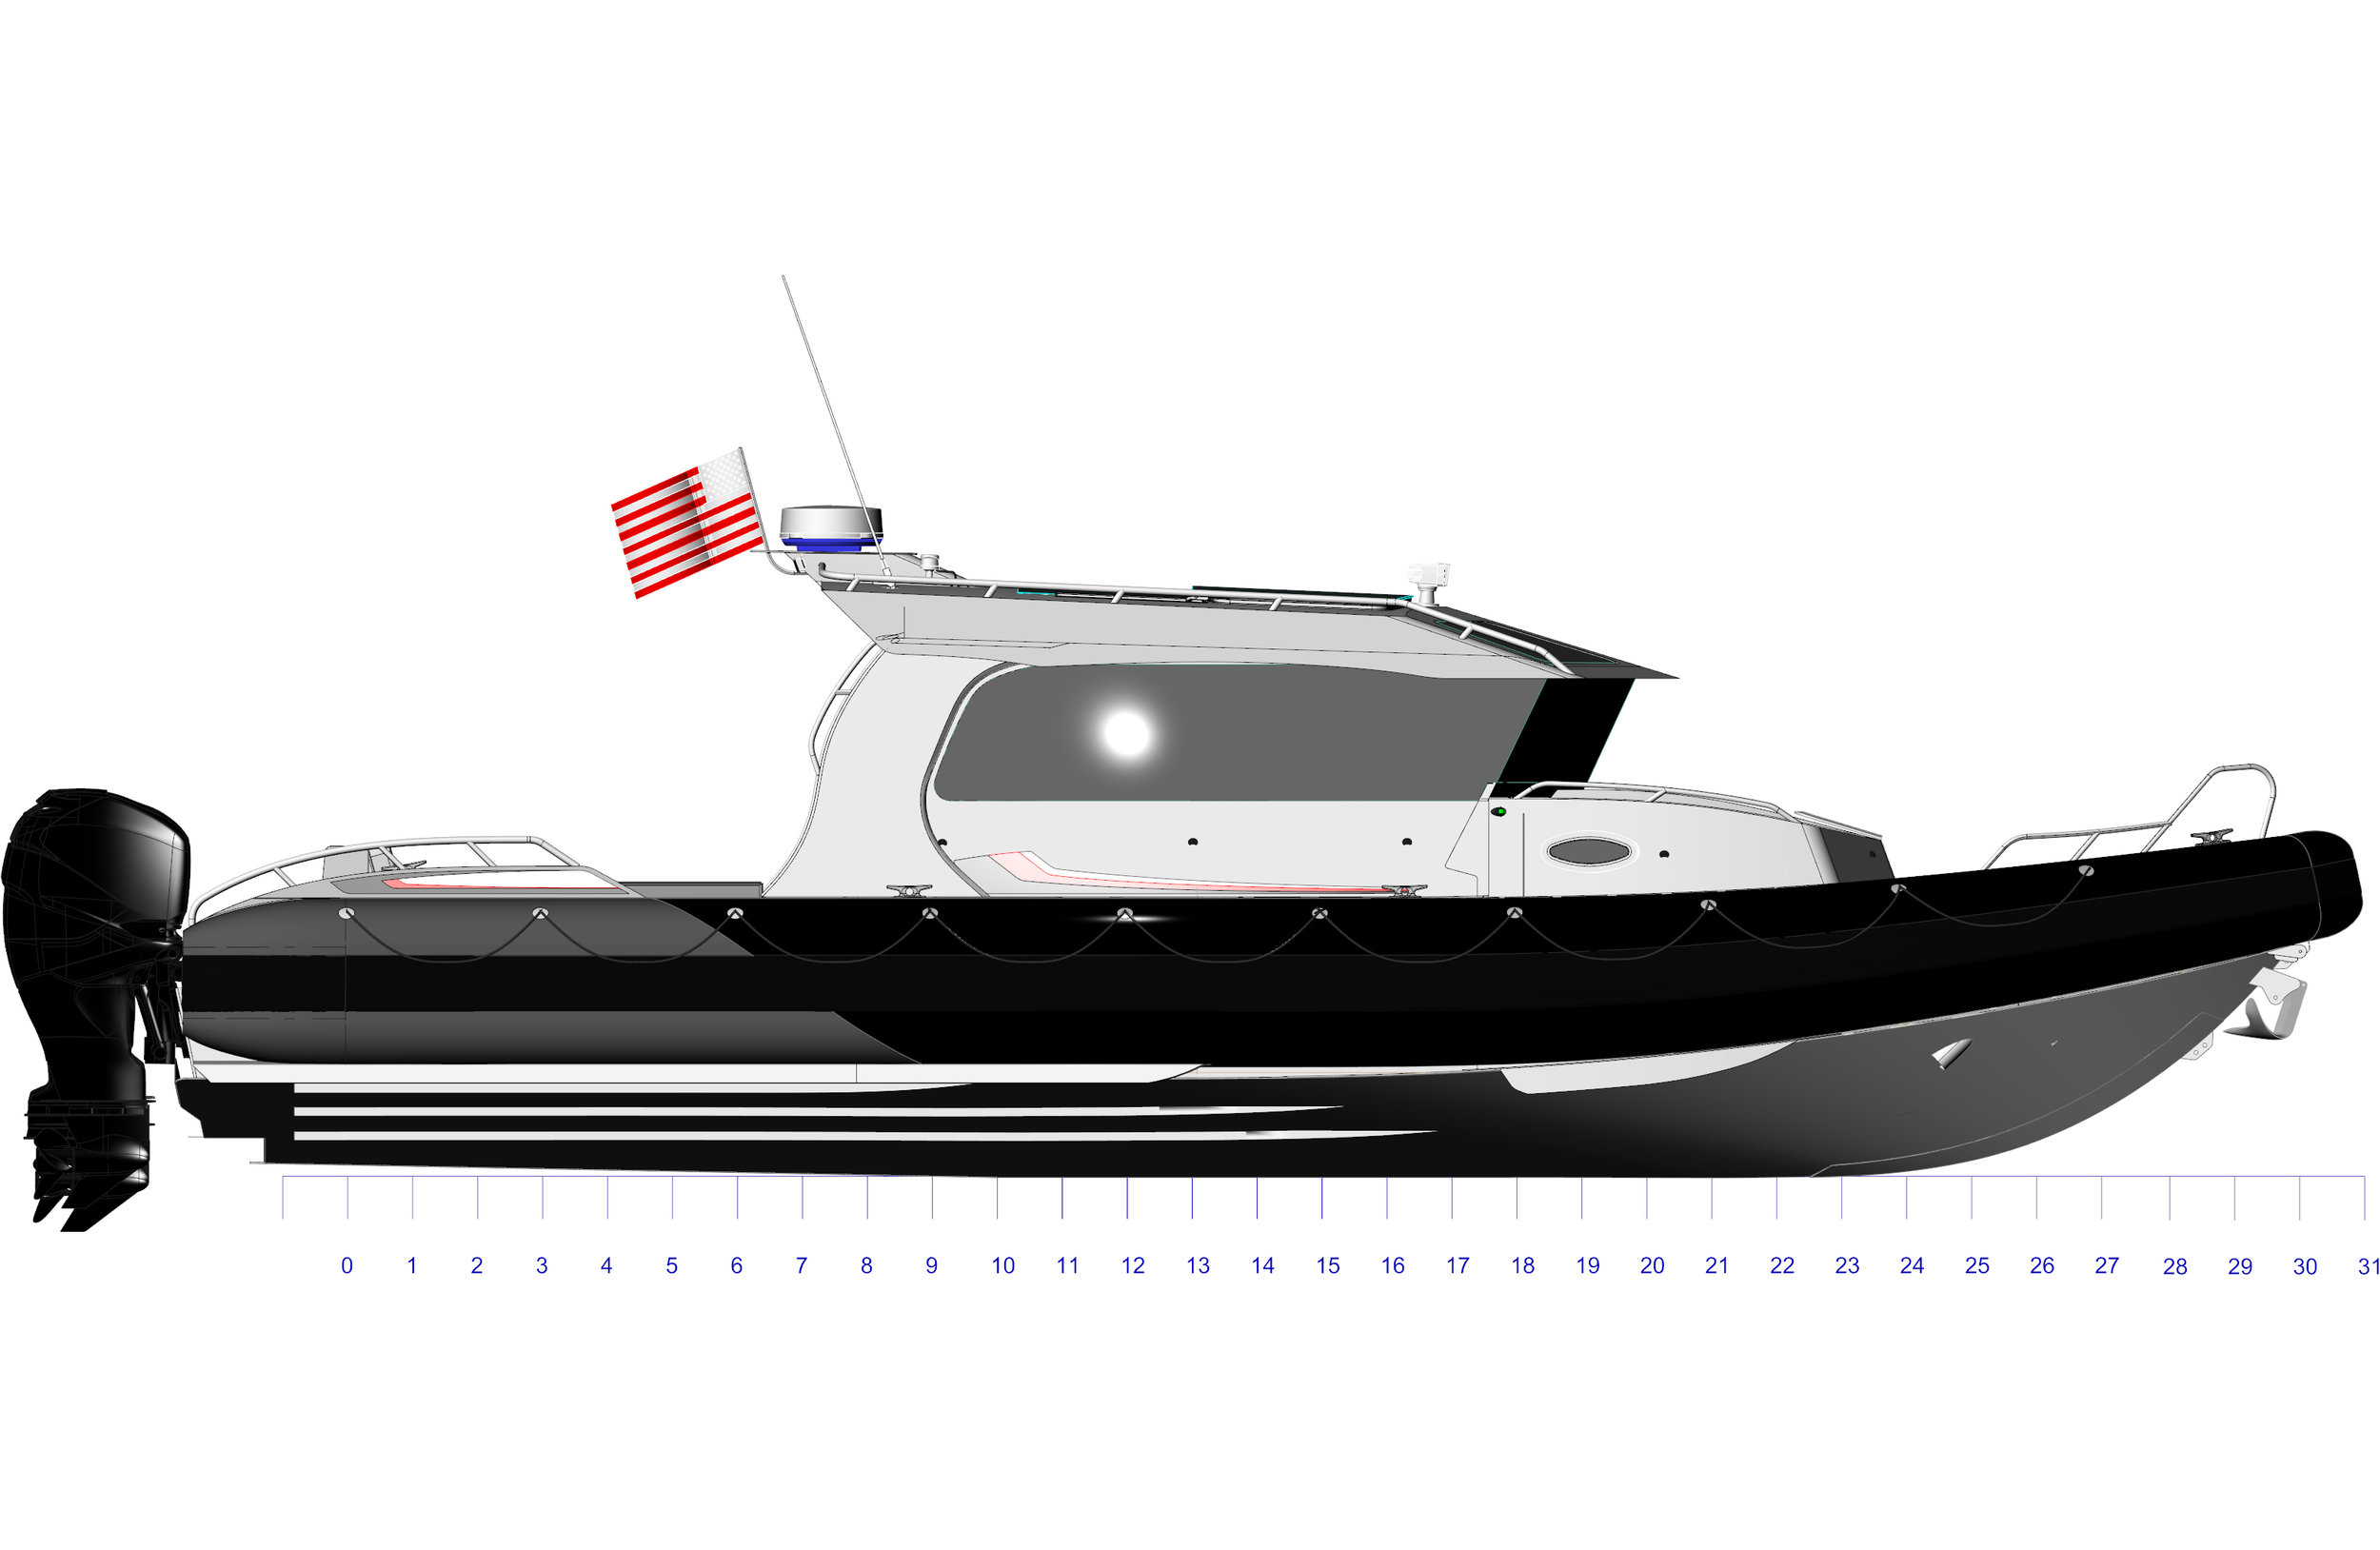 33FT Full Cabin Yachtline Side Profile.jpg